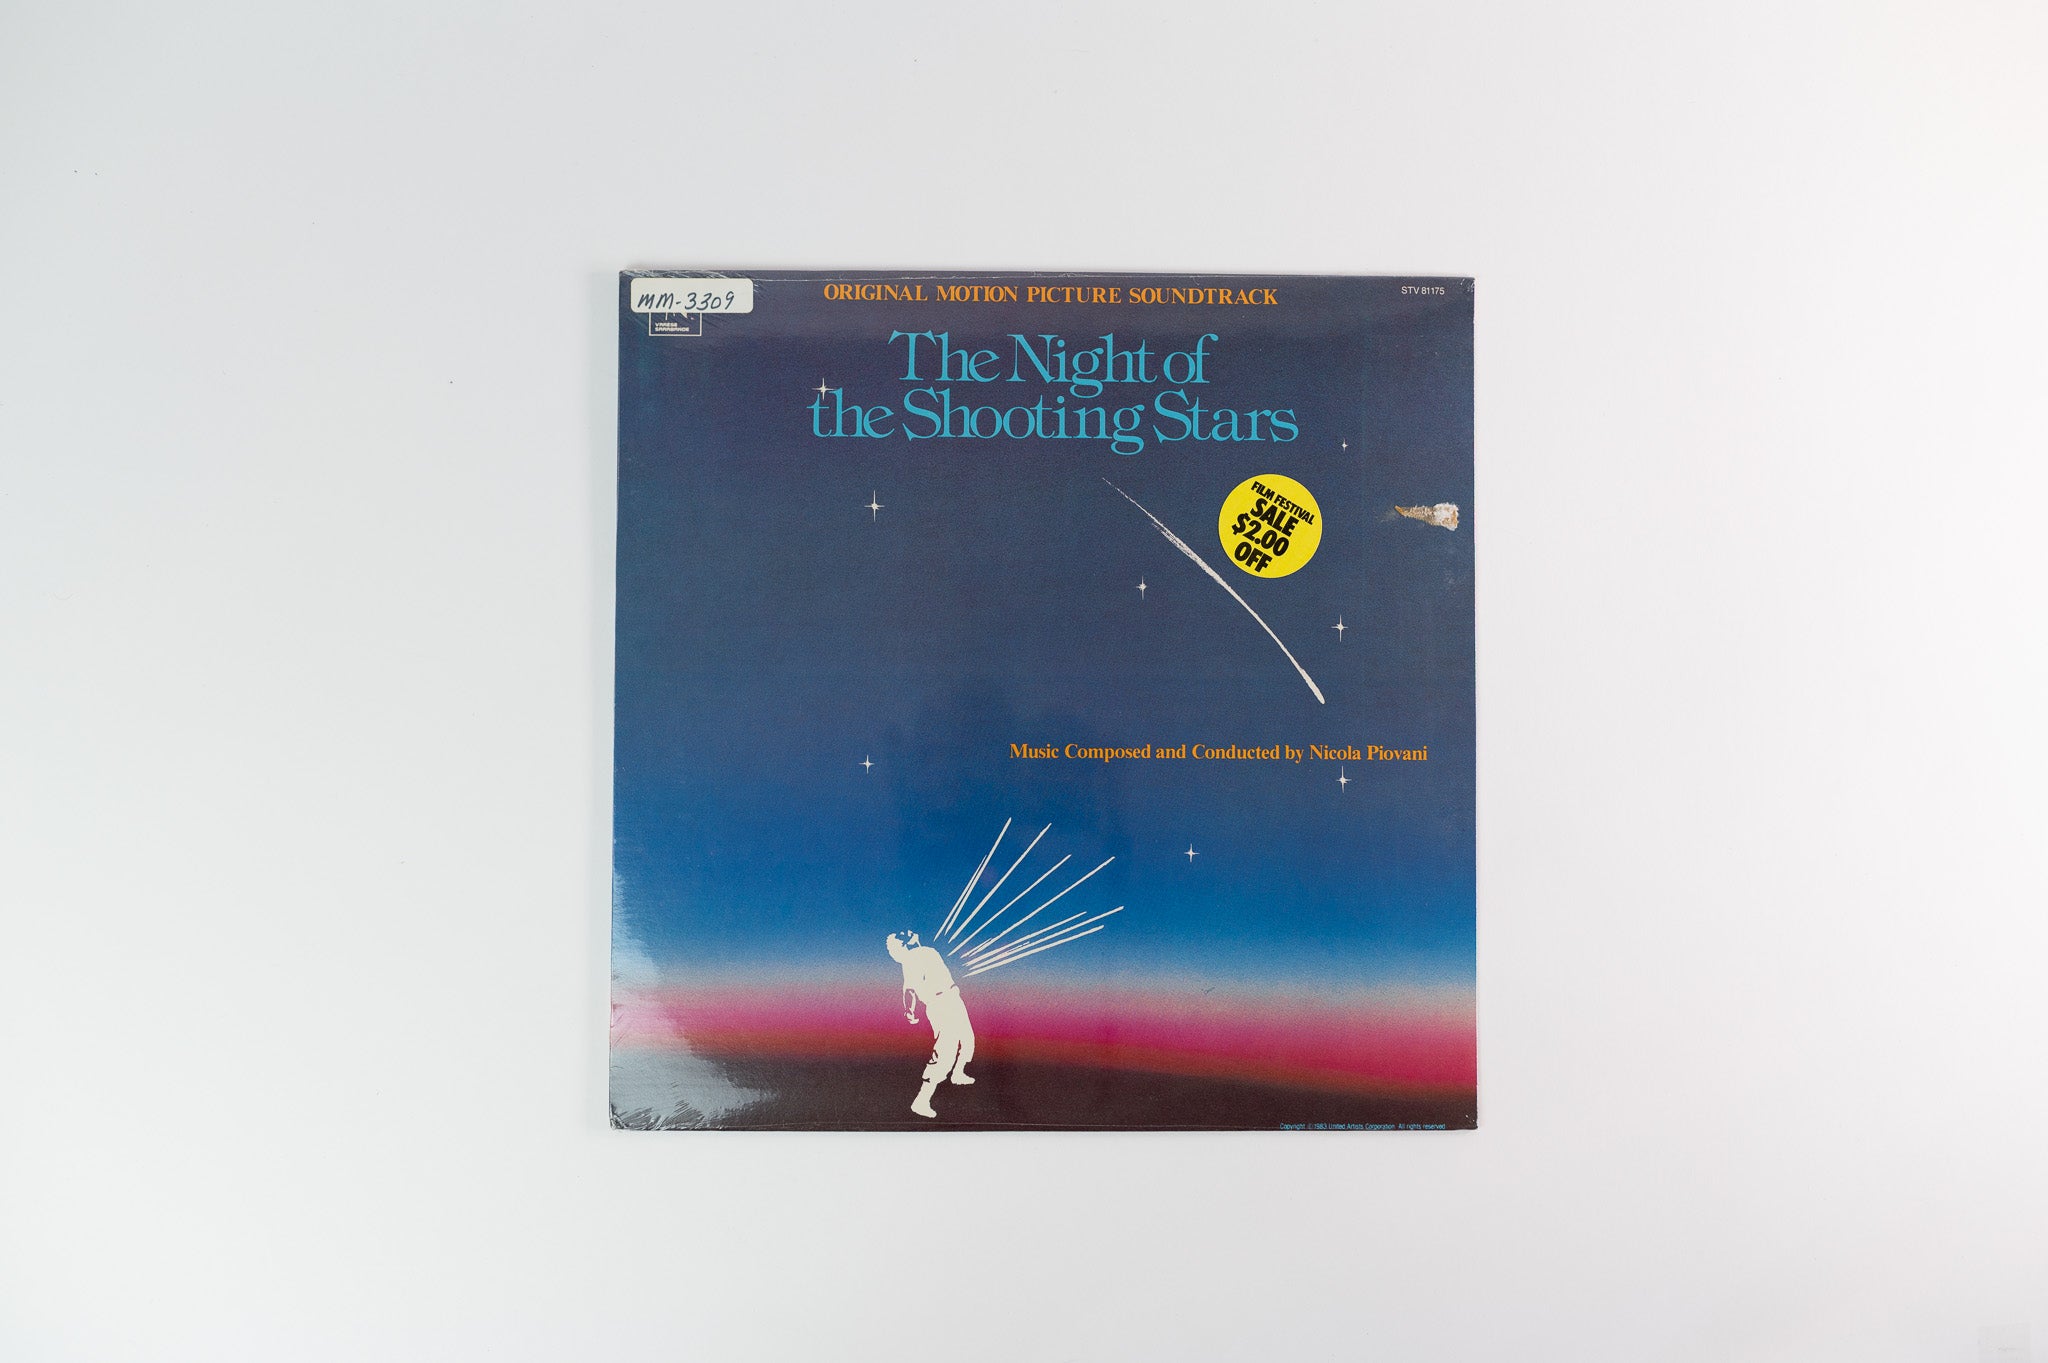 Nicola Piovani - The Night Of The Shooting Stars (Original Soundtrack) on Varese Sarabande Sealed